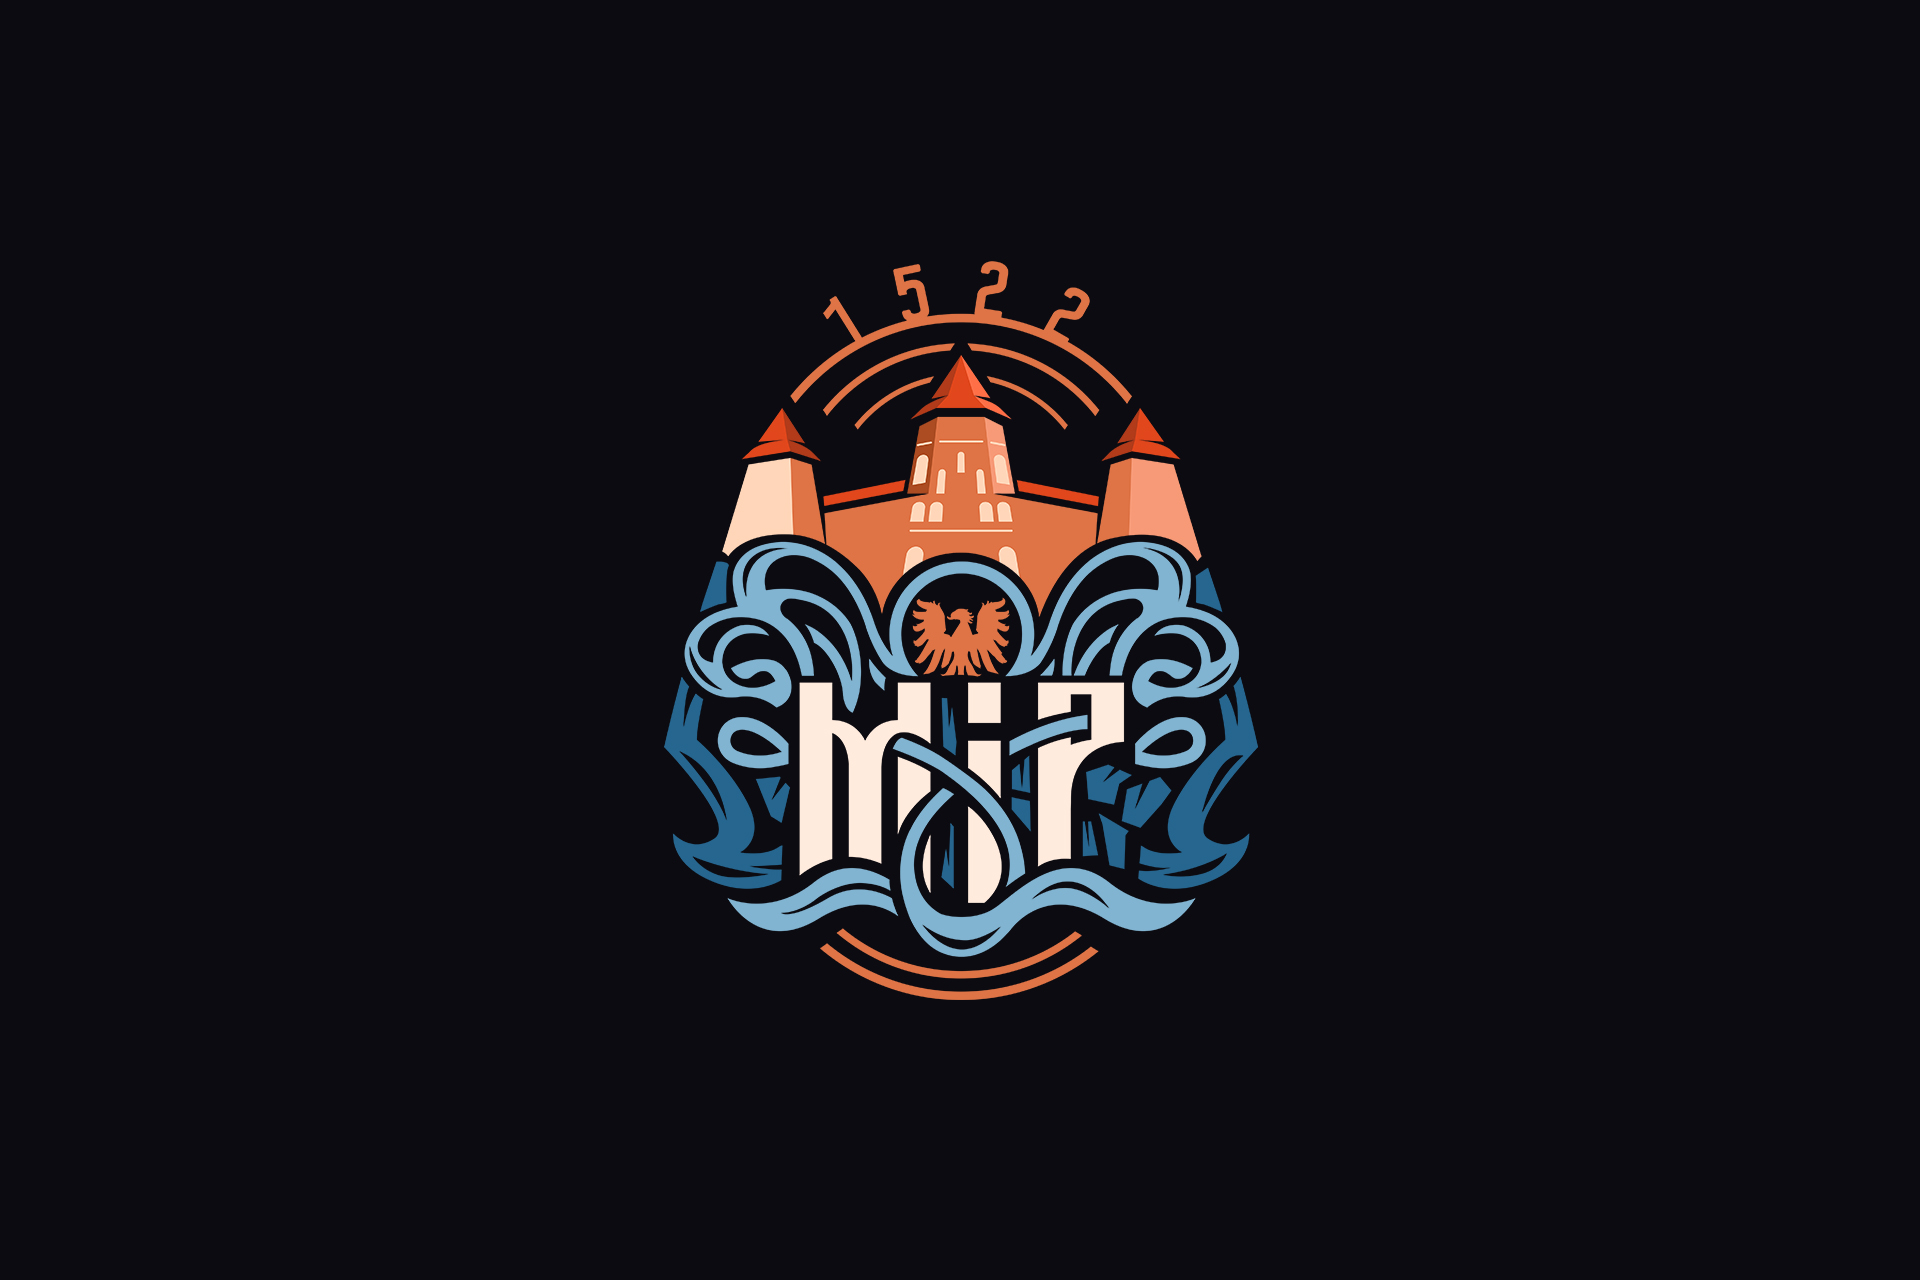 Projekt logo na zamek